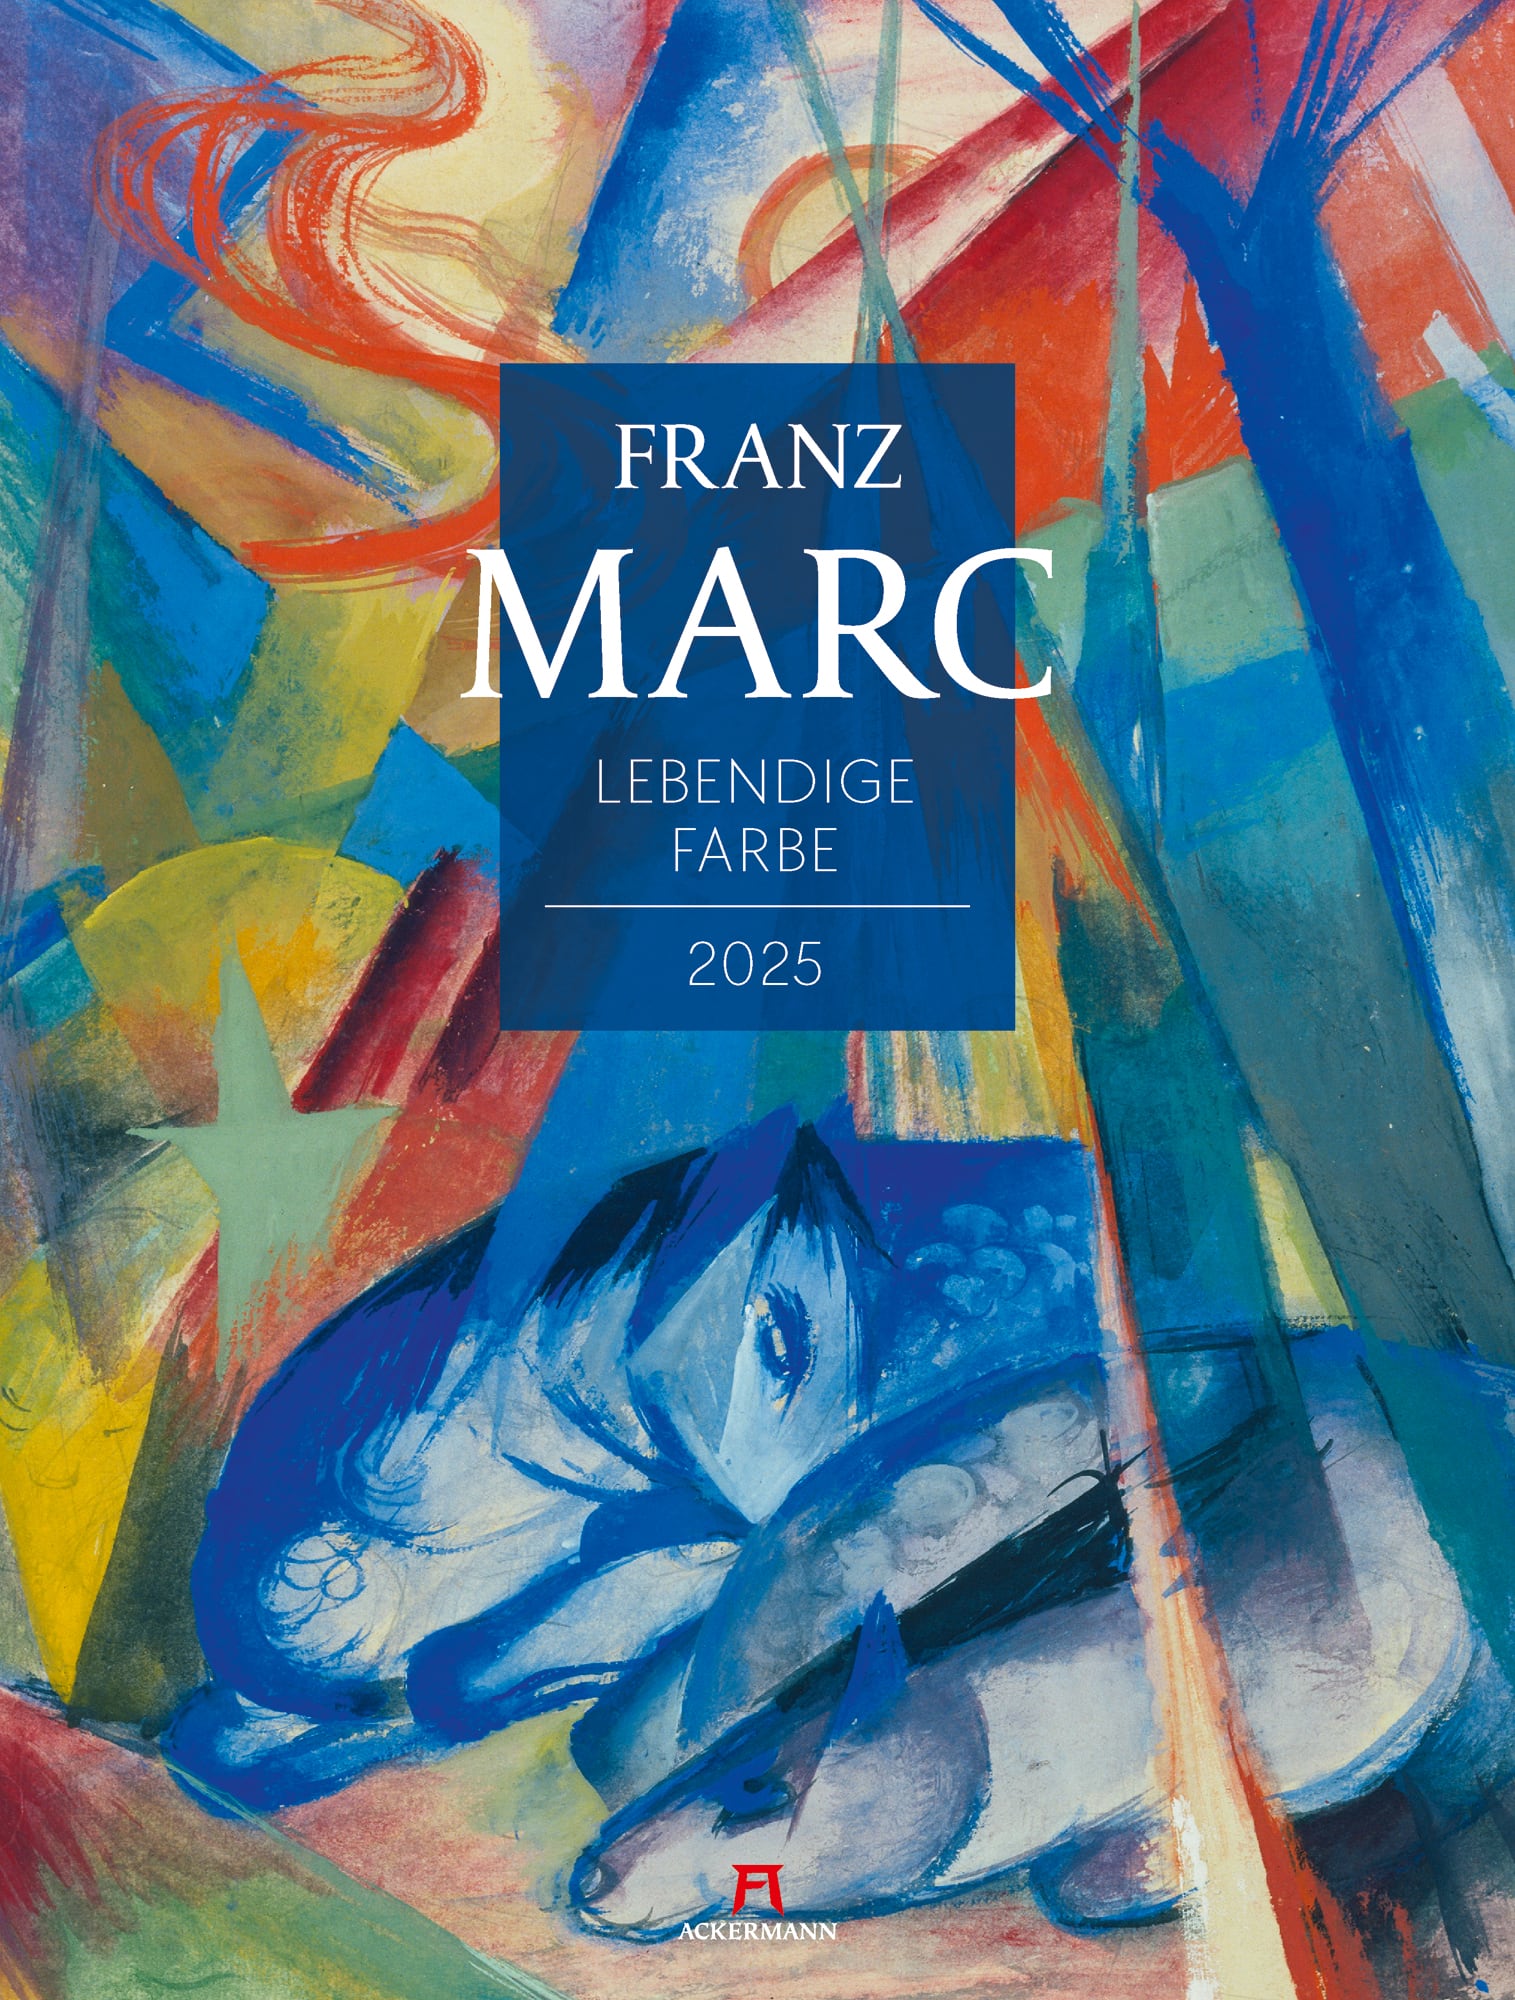 Ackermann Calendar Franz Marc 2025 - Cover Page